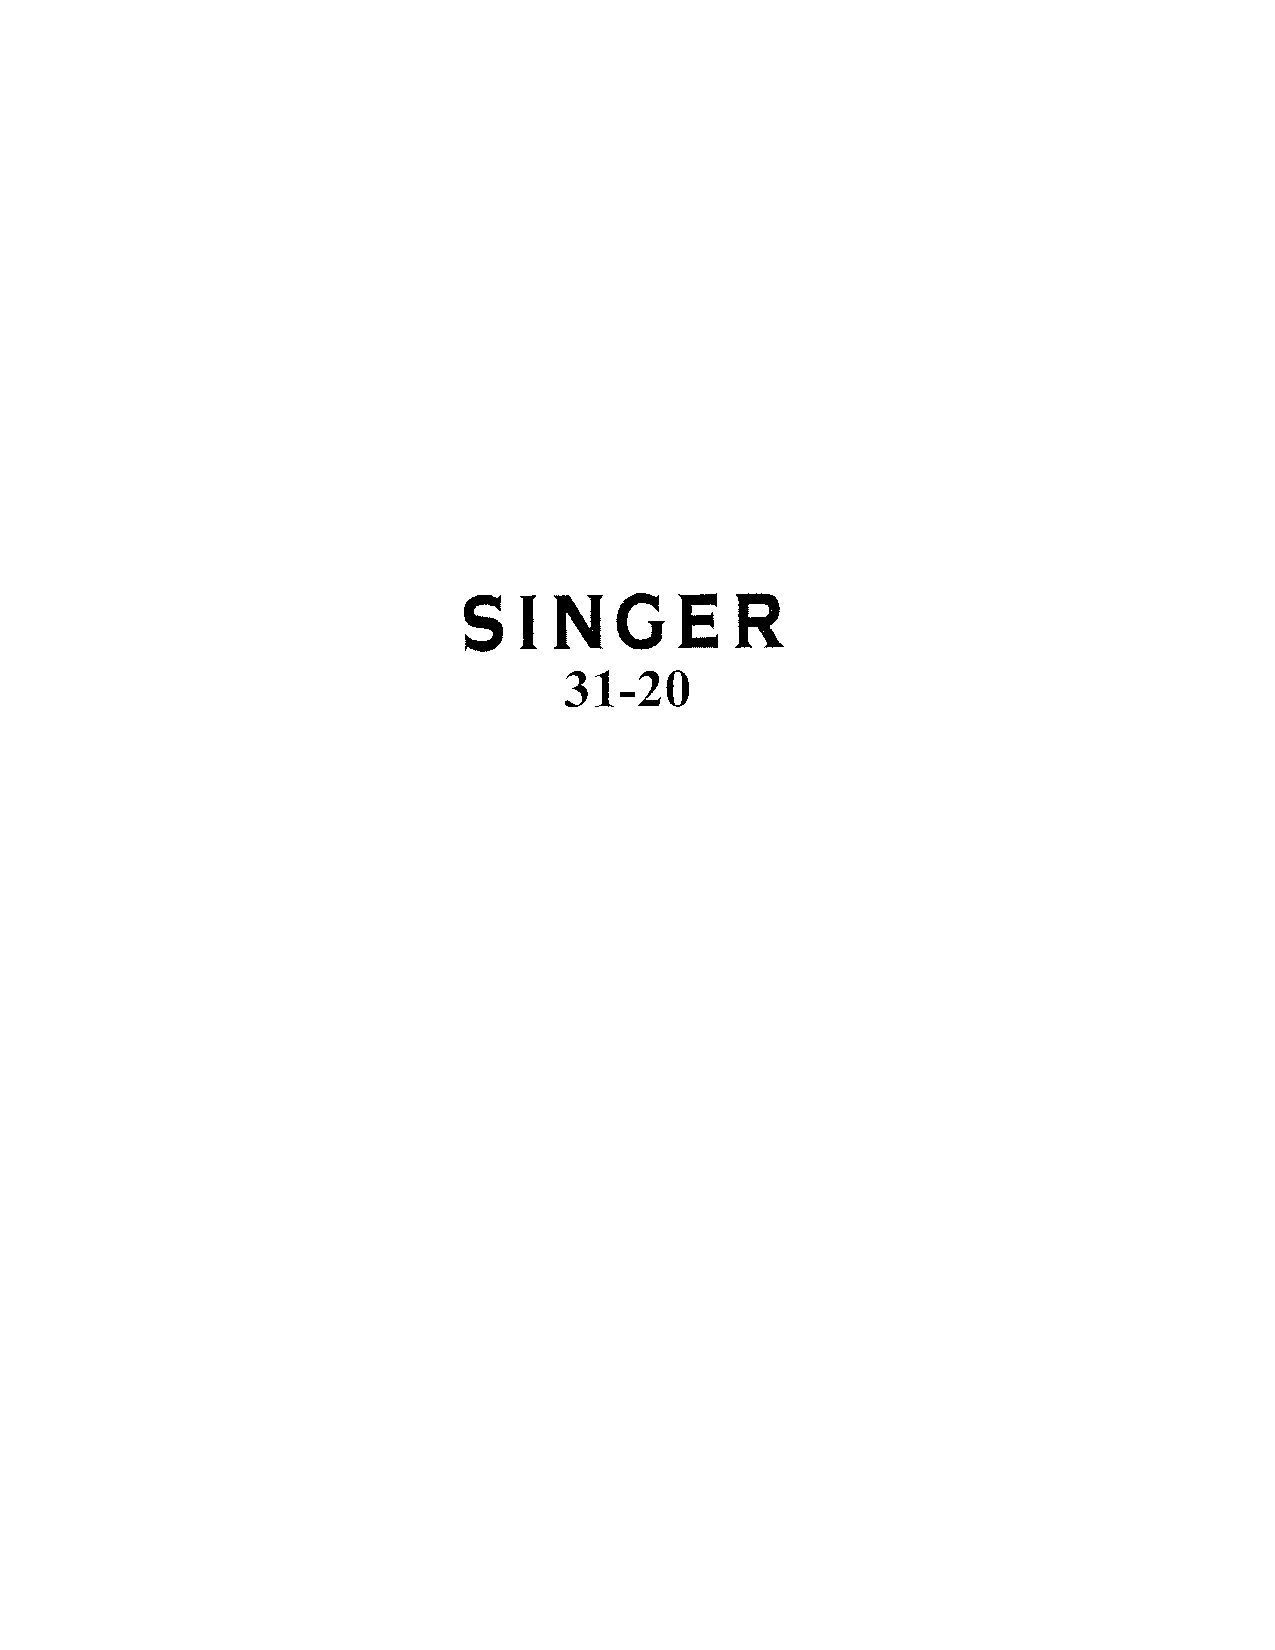 Singer 31-20 User Manual